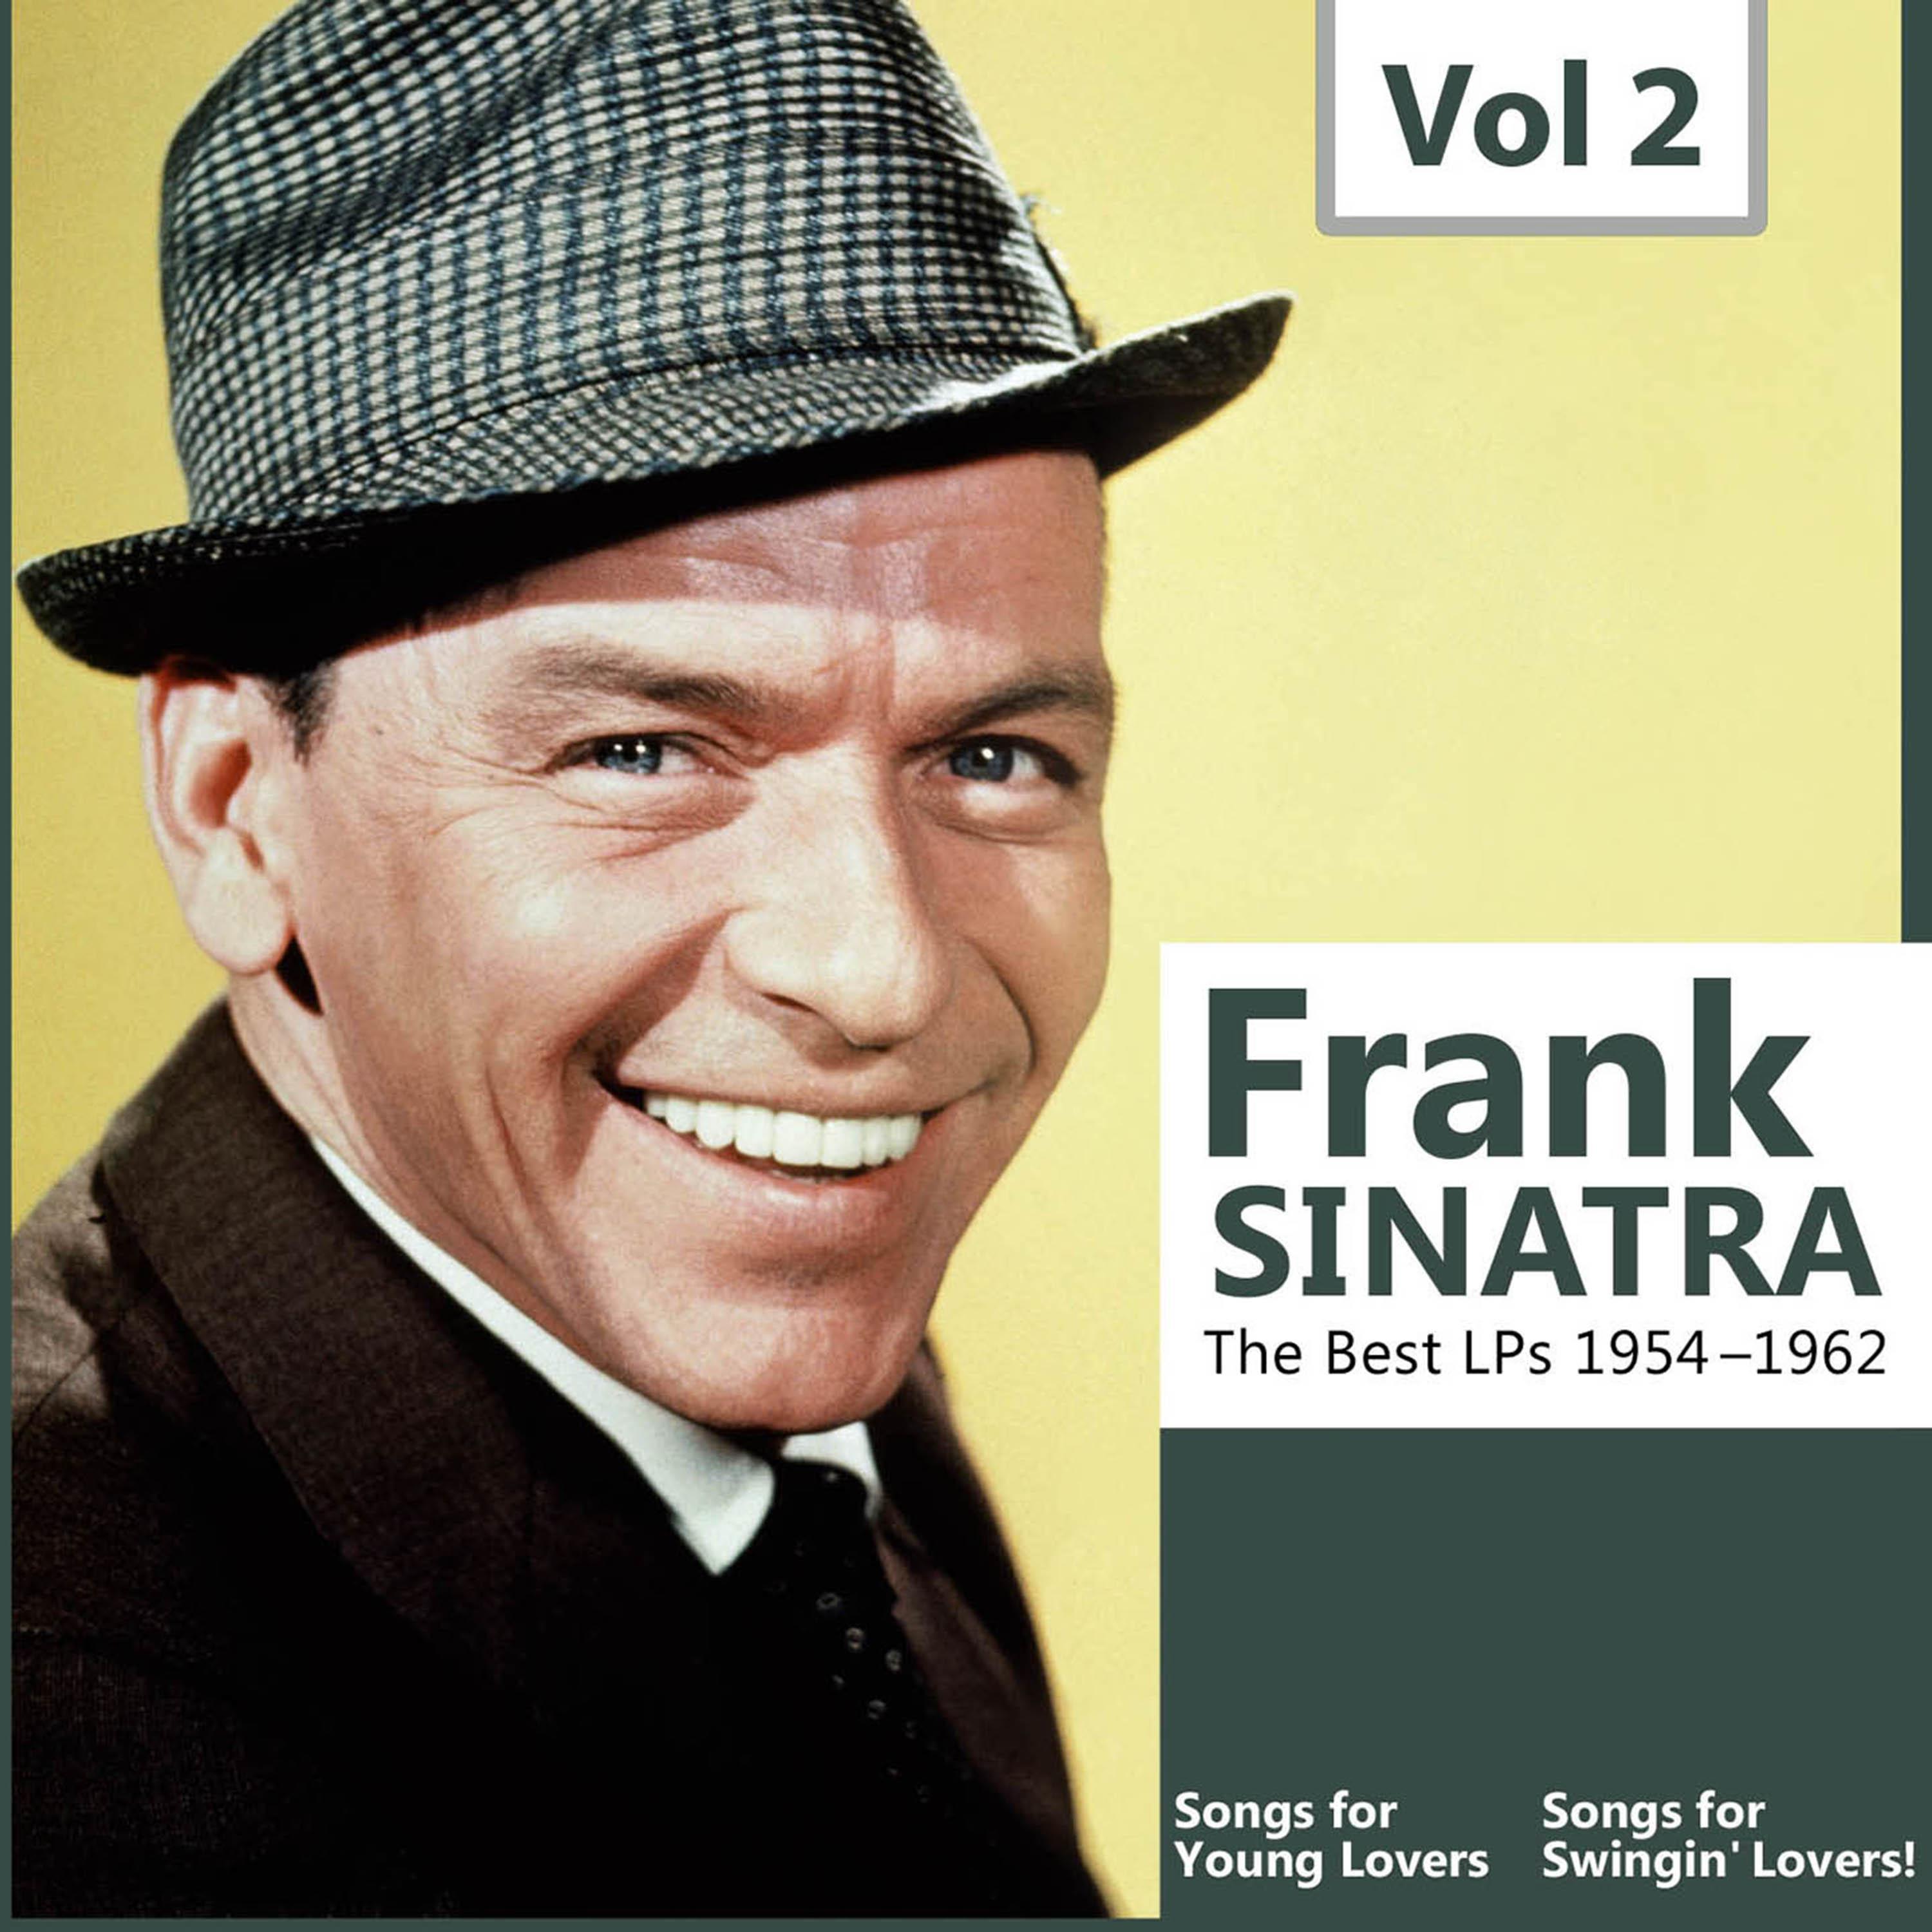 The Best Lps 1954-1962 - Frank Sinatra, Vol.2